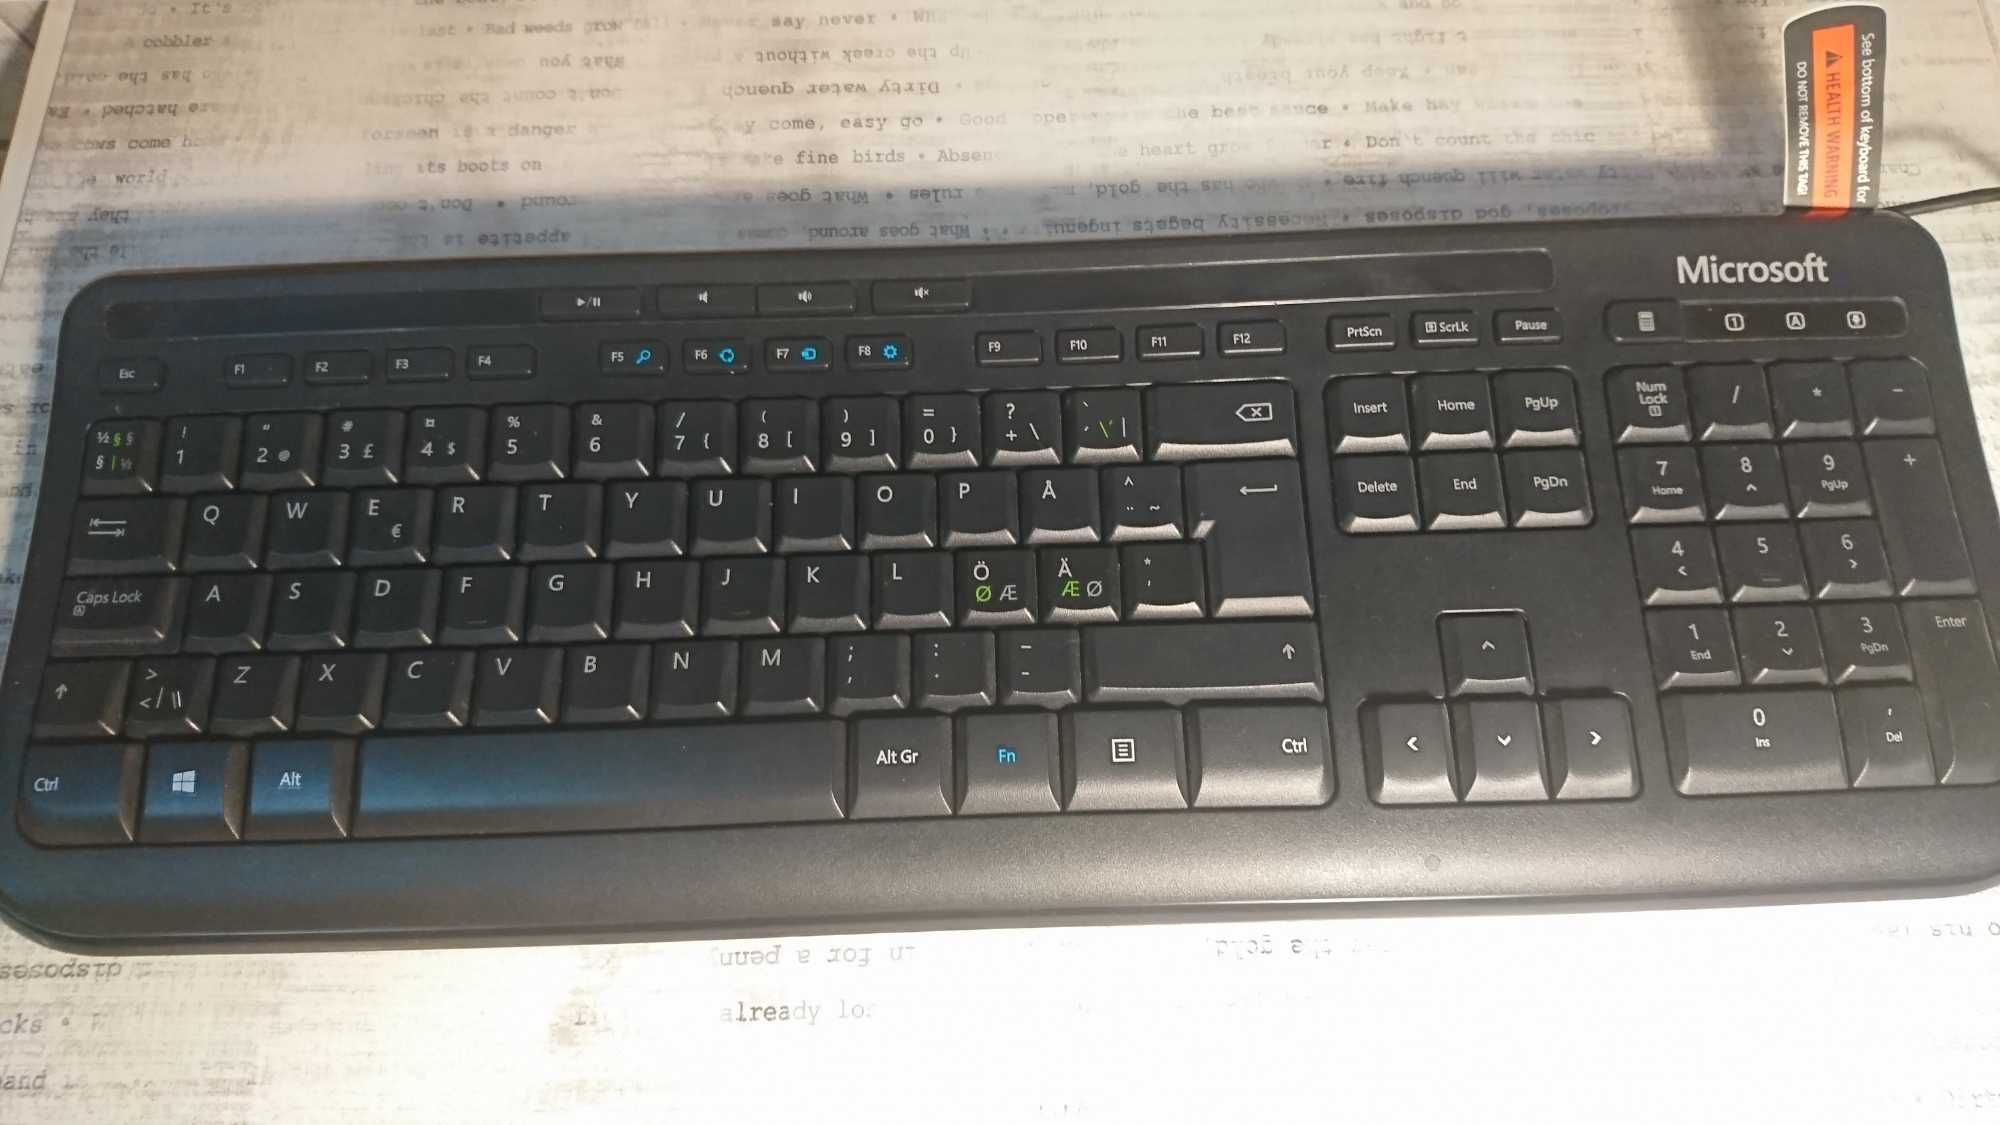 Klawiatura Microsoft Wired Keyboard 600 USB